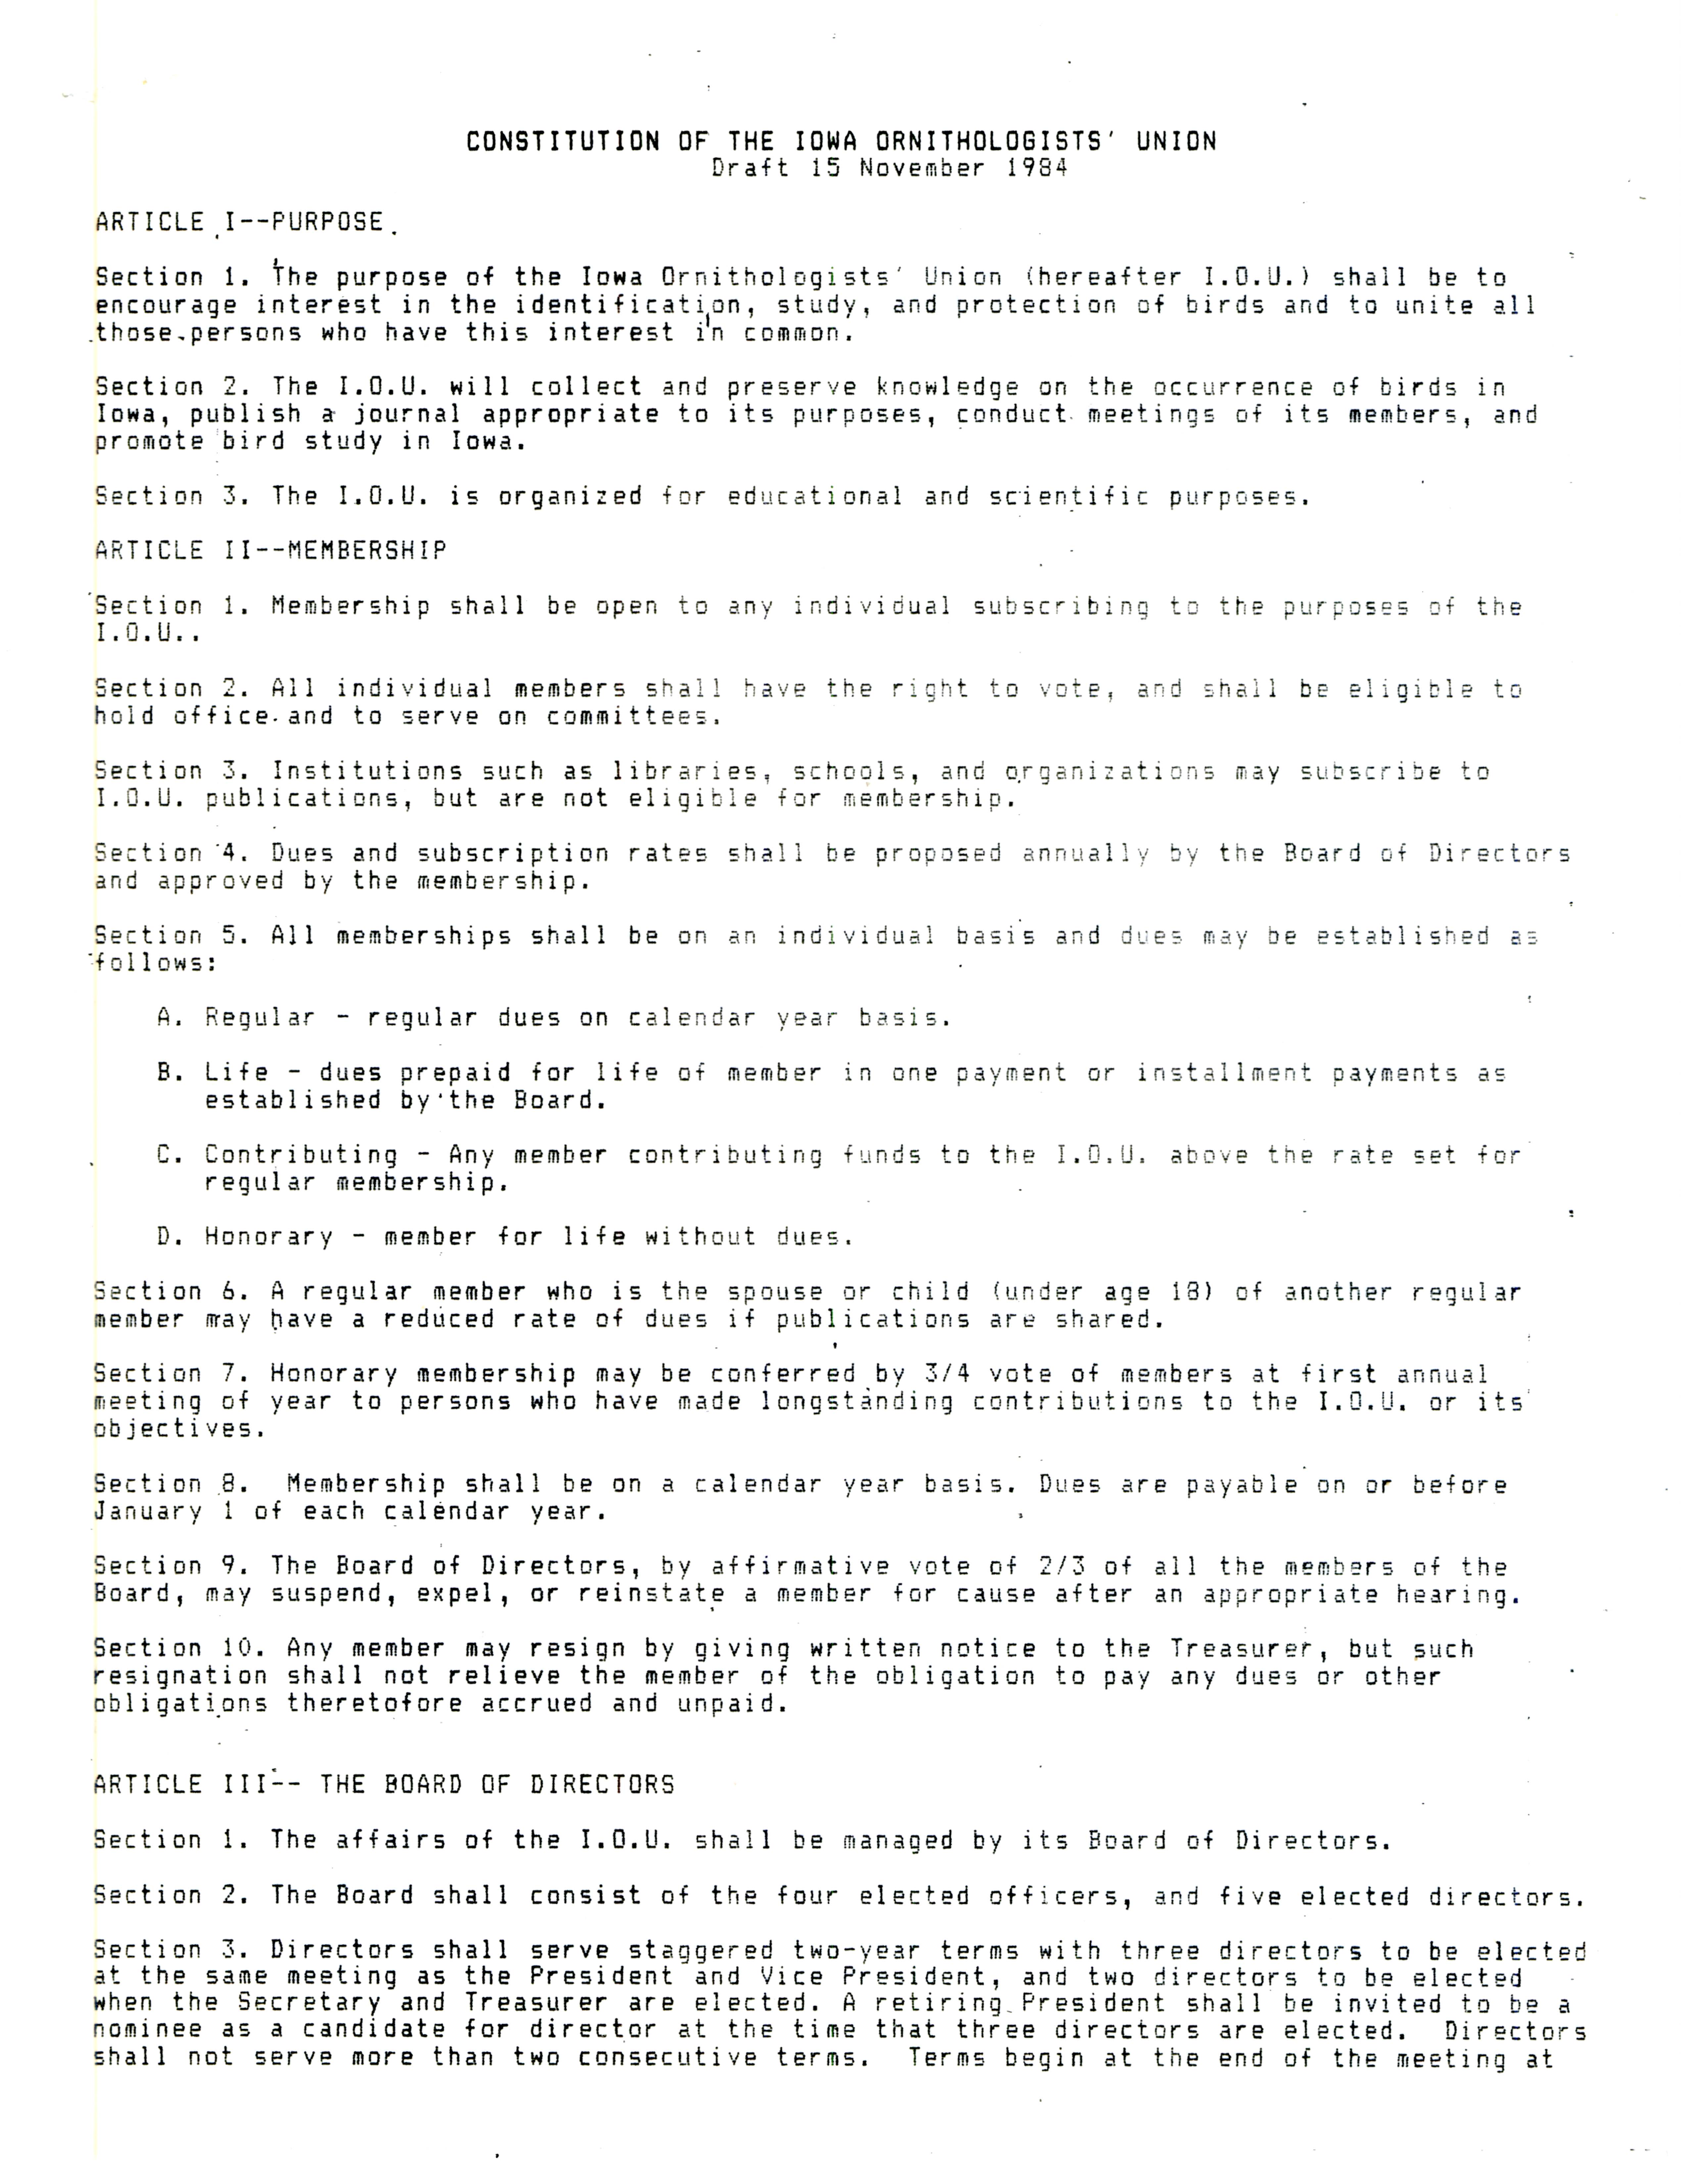 Draft Constitution of the Iowa Ornithologists' Union, November 15, 1984